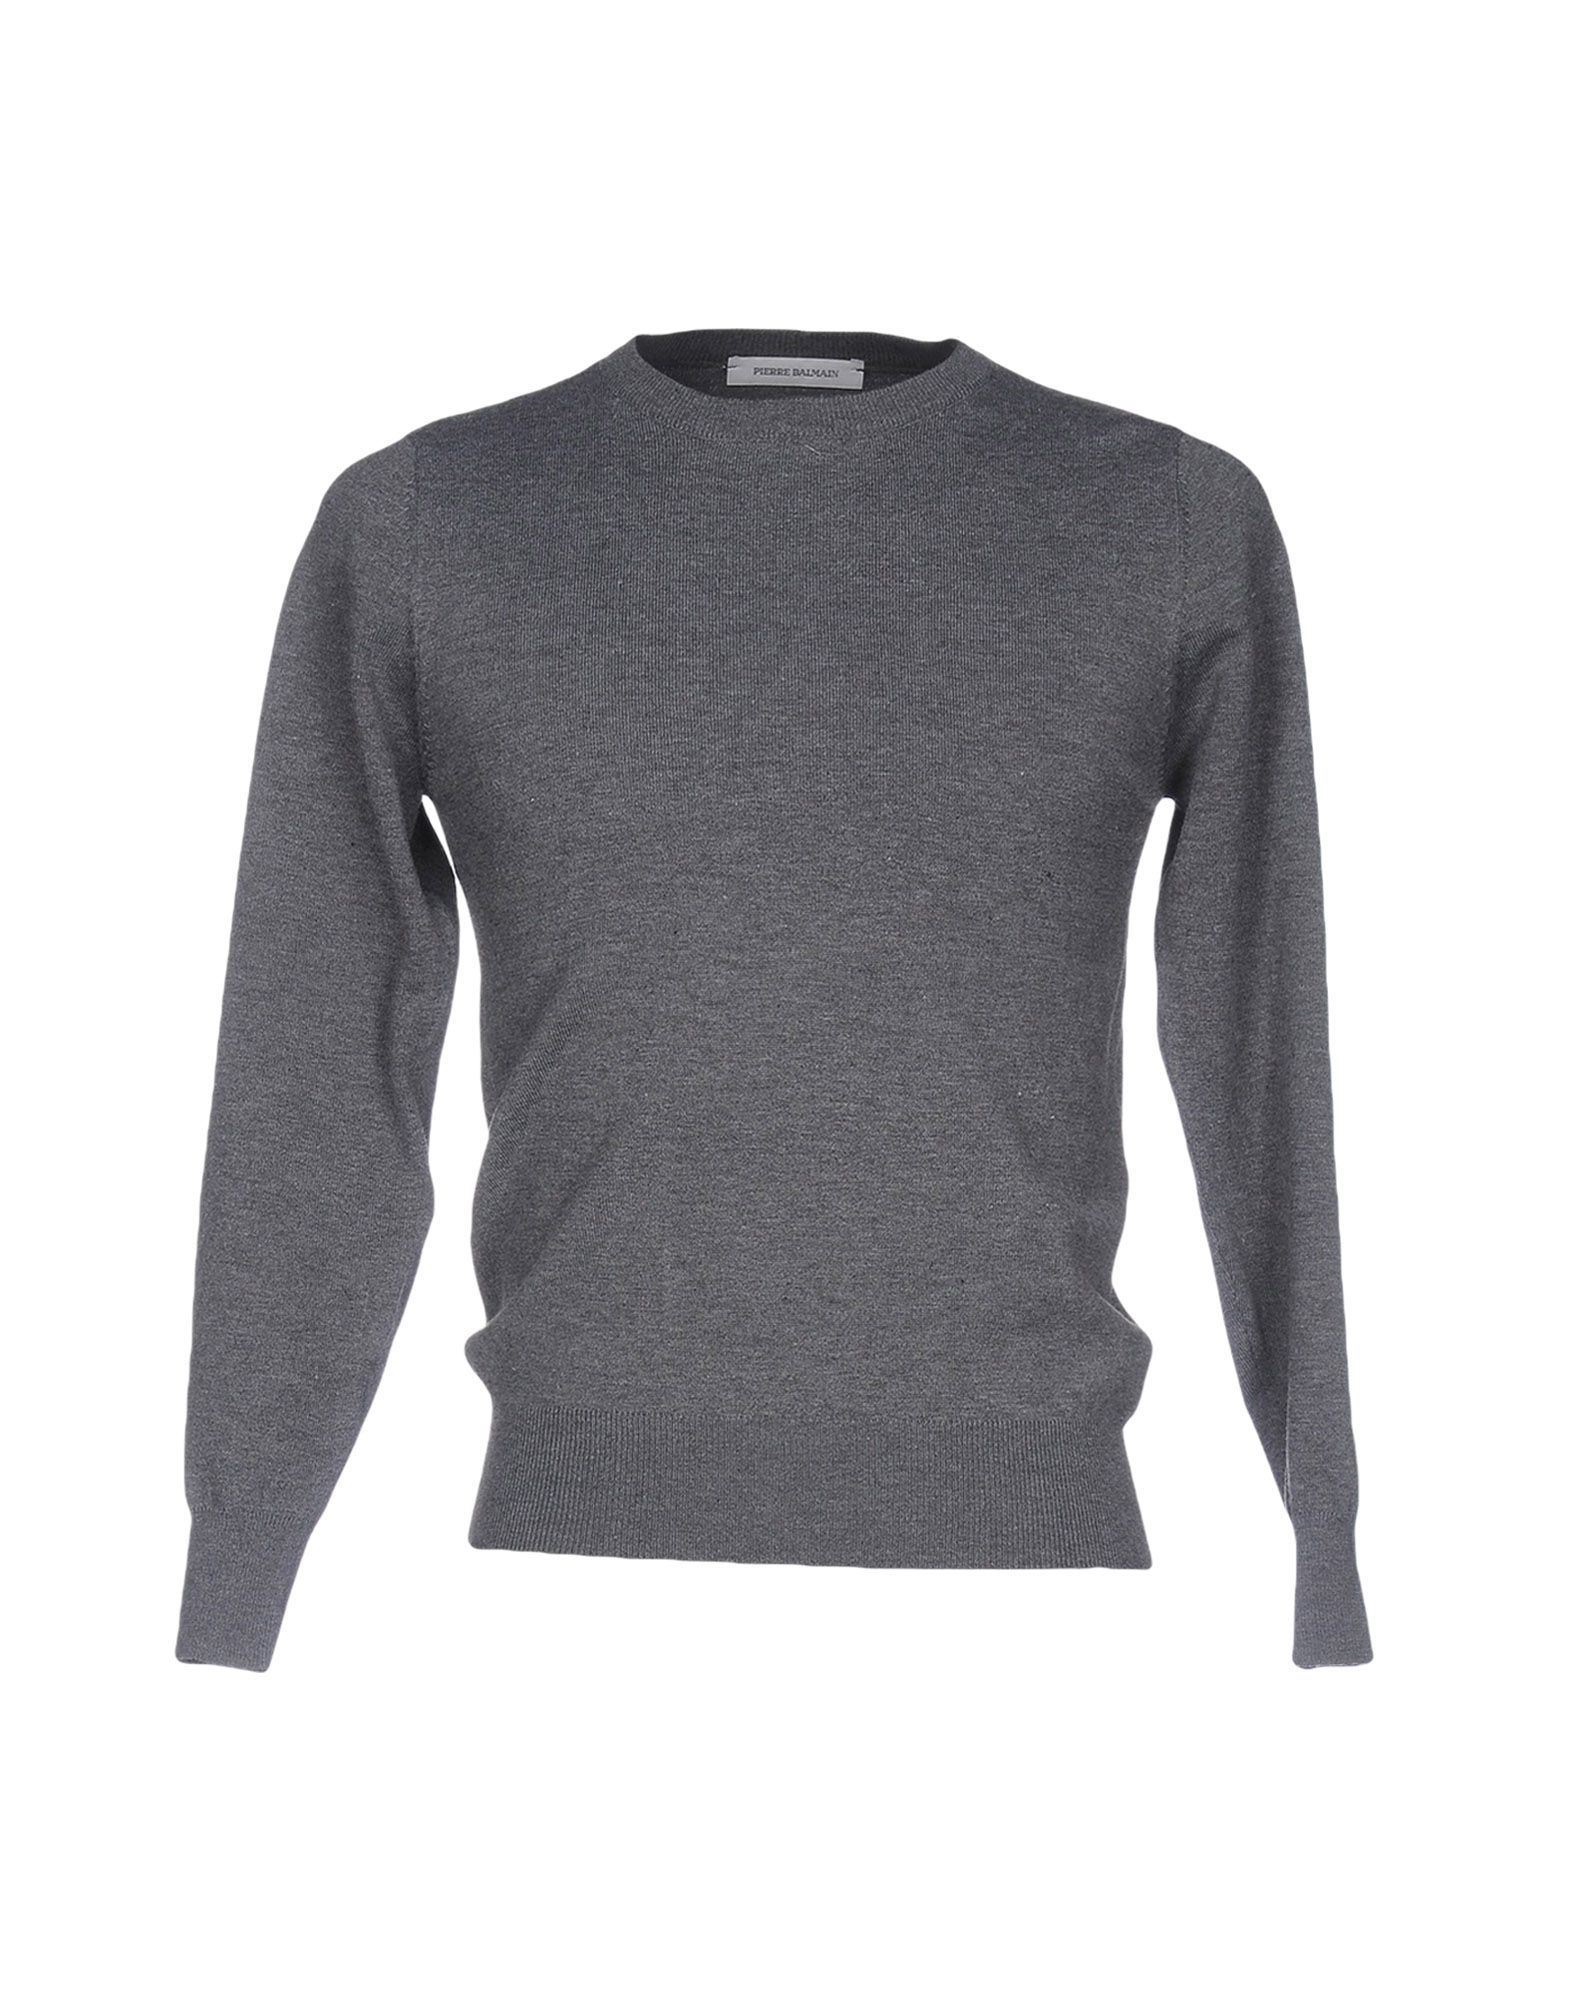 PIERRE BALMAIN Sweaters | YOOX (US)